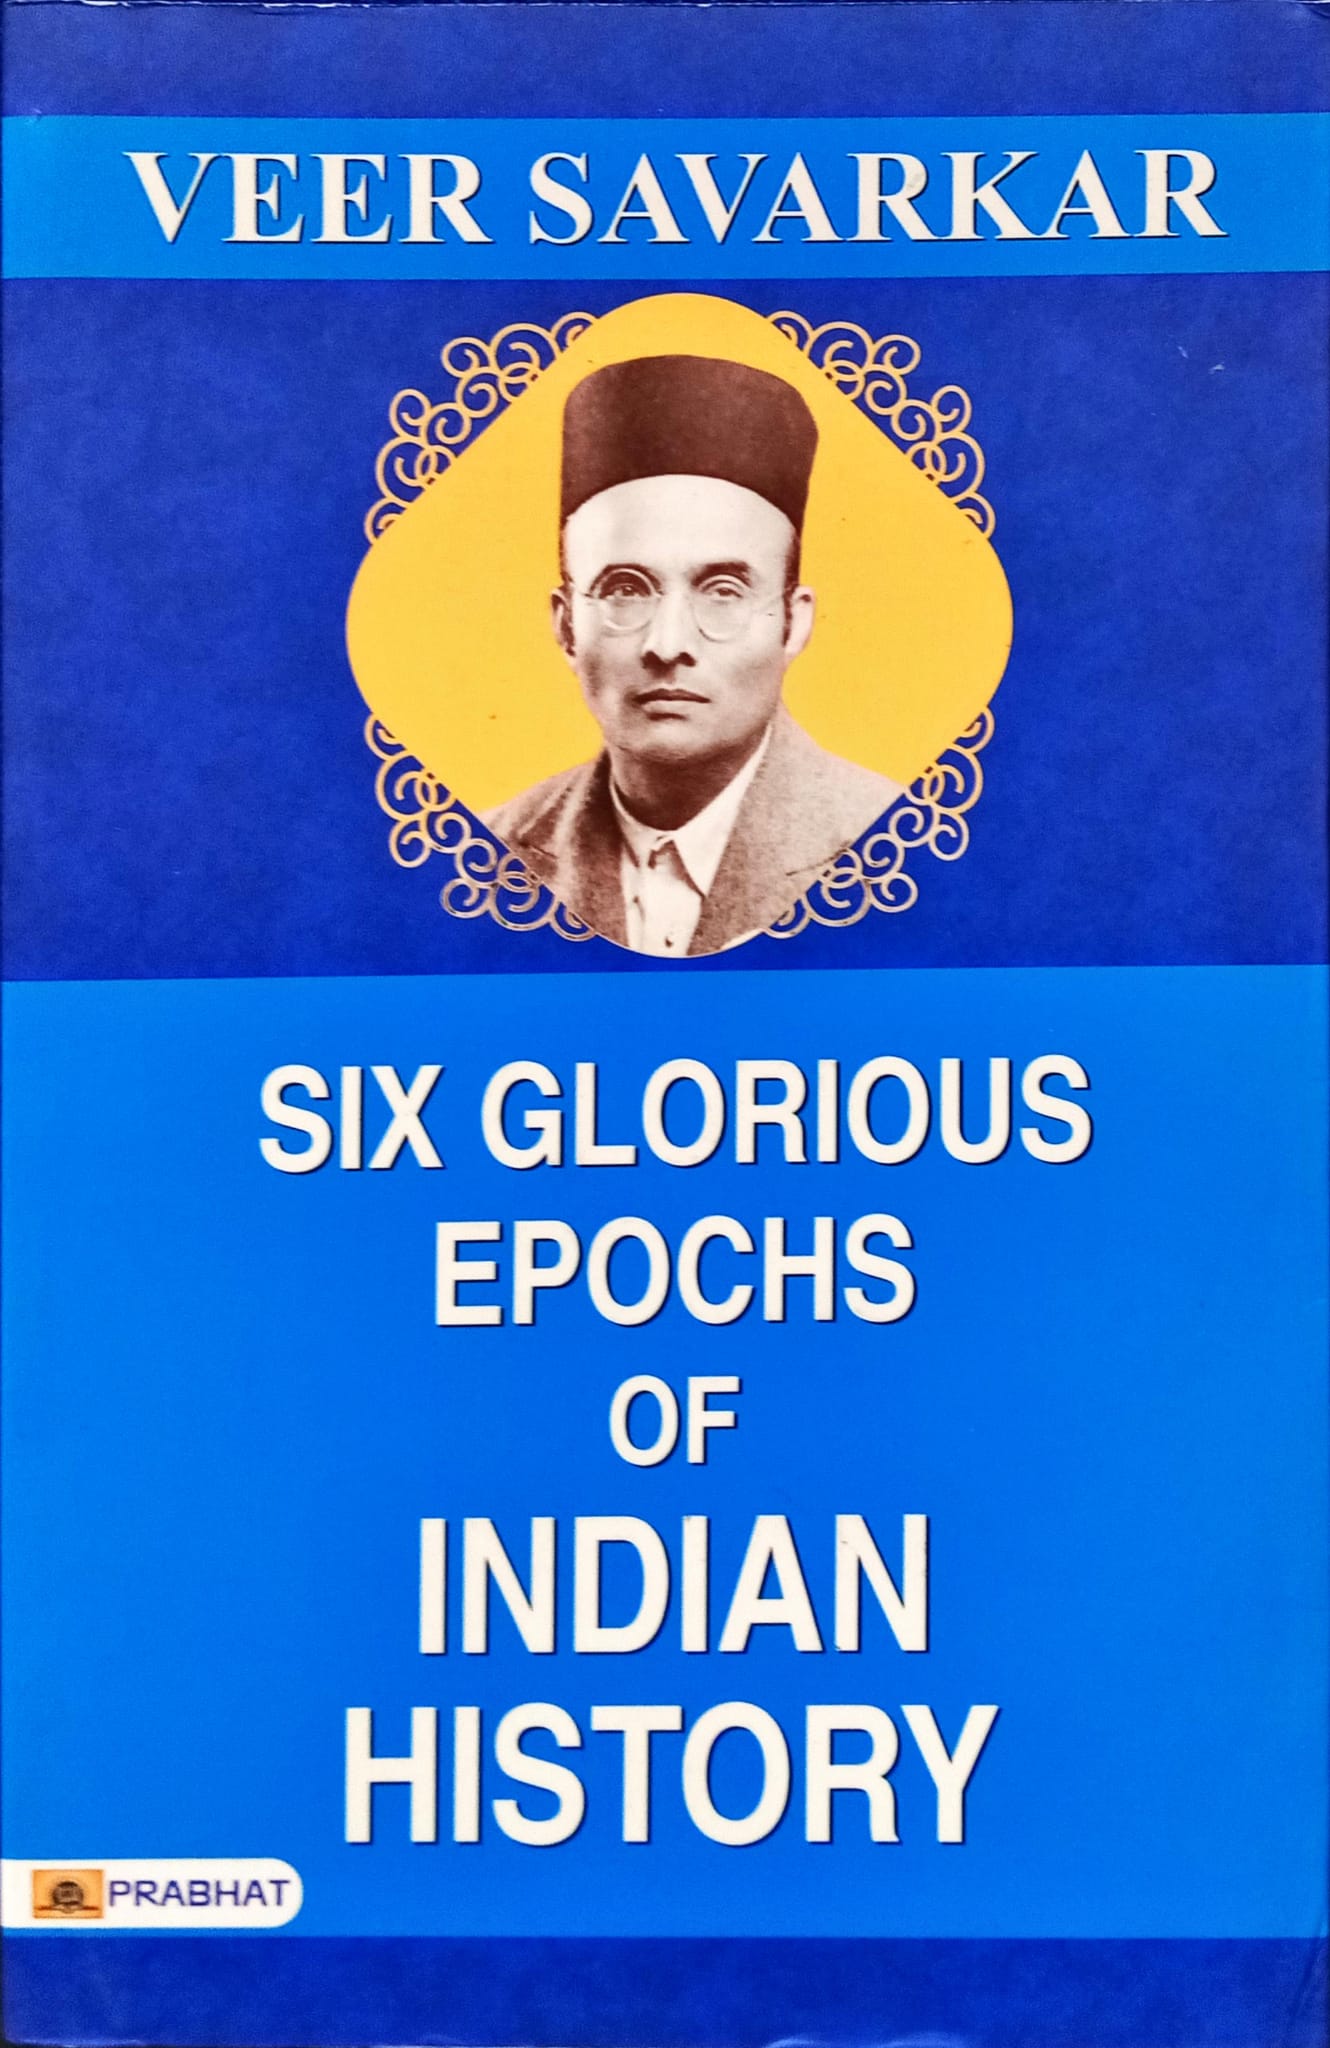 Veer Savarkar - Six Glorious Epochs of Indian History